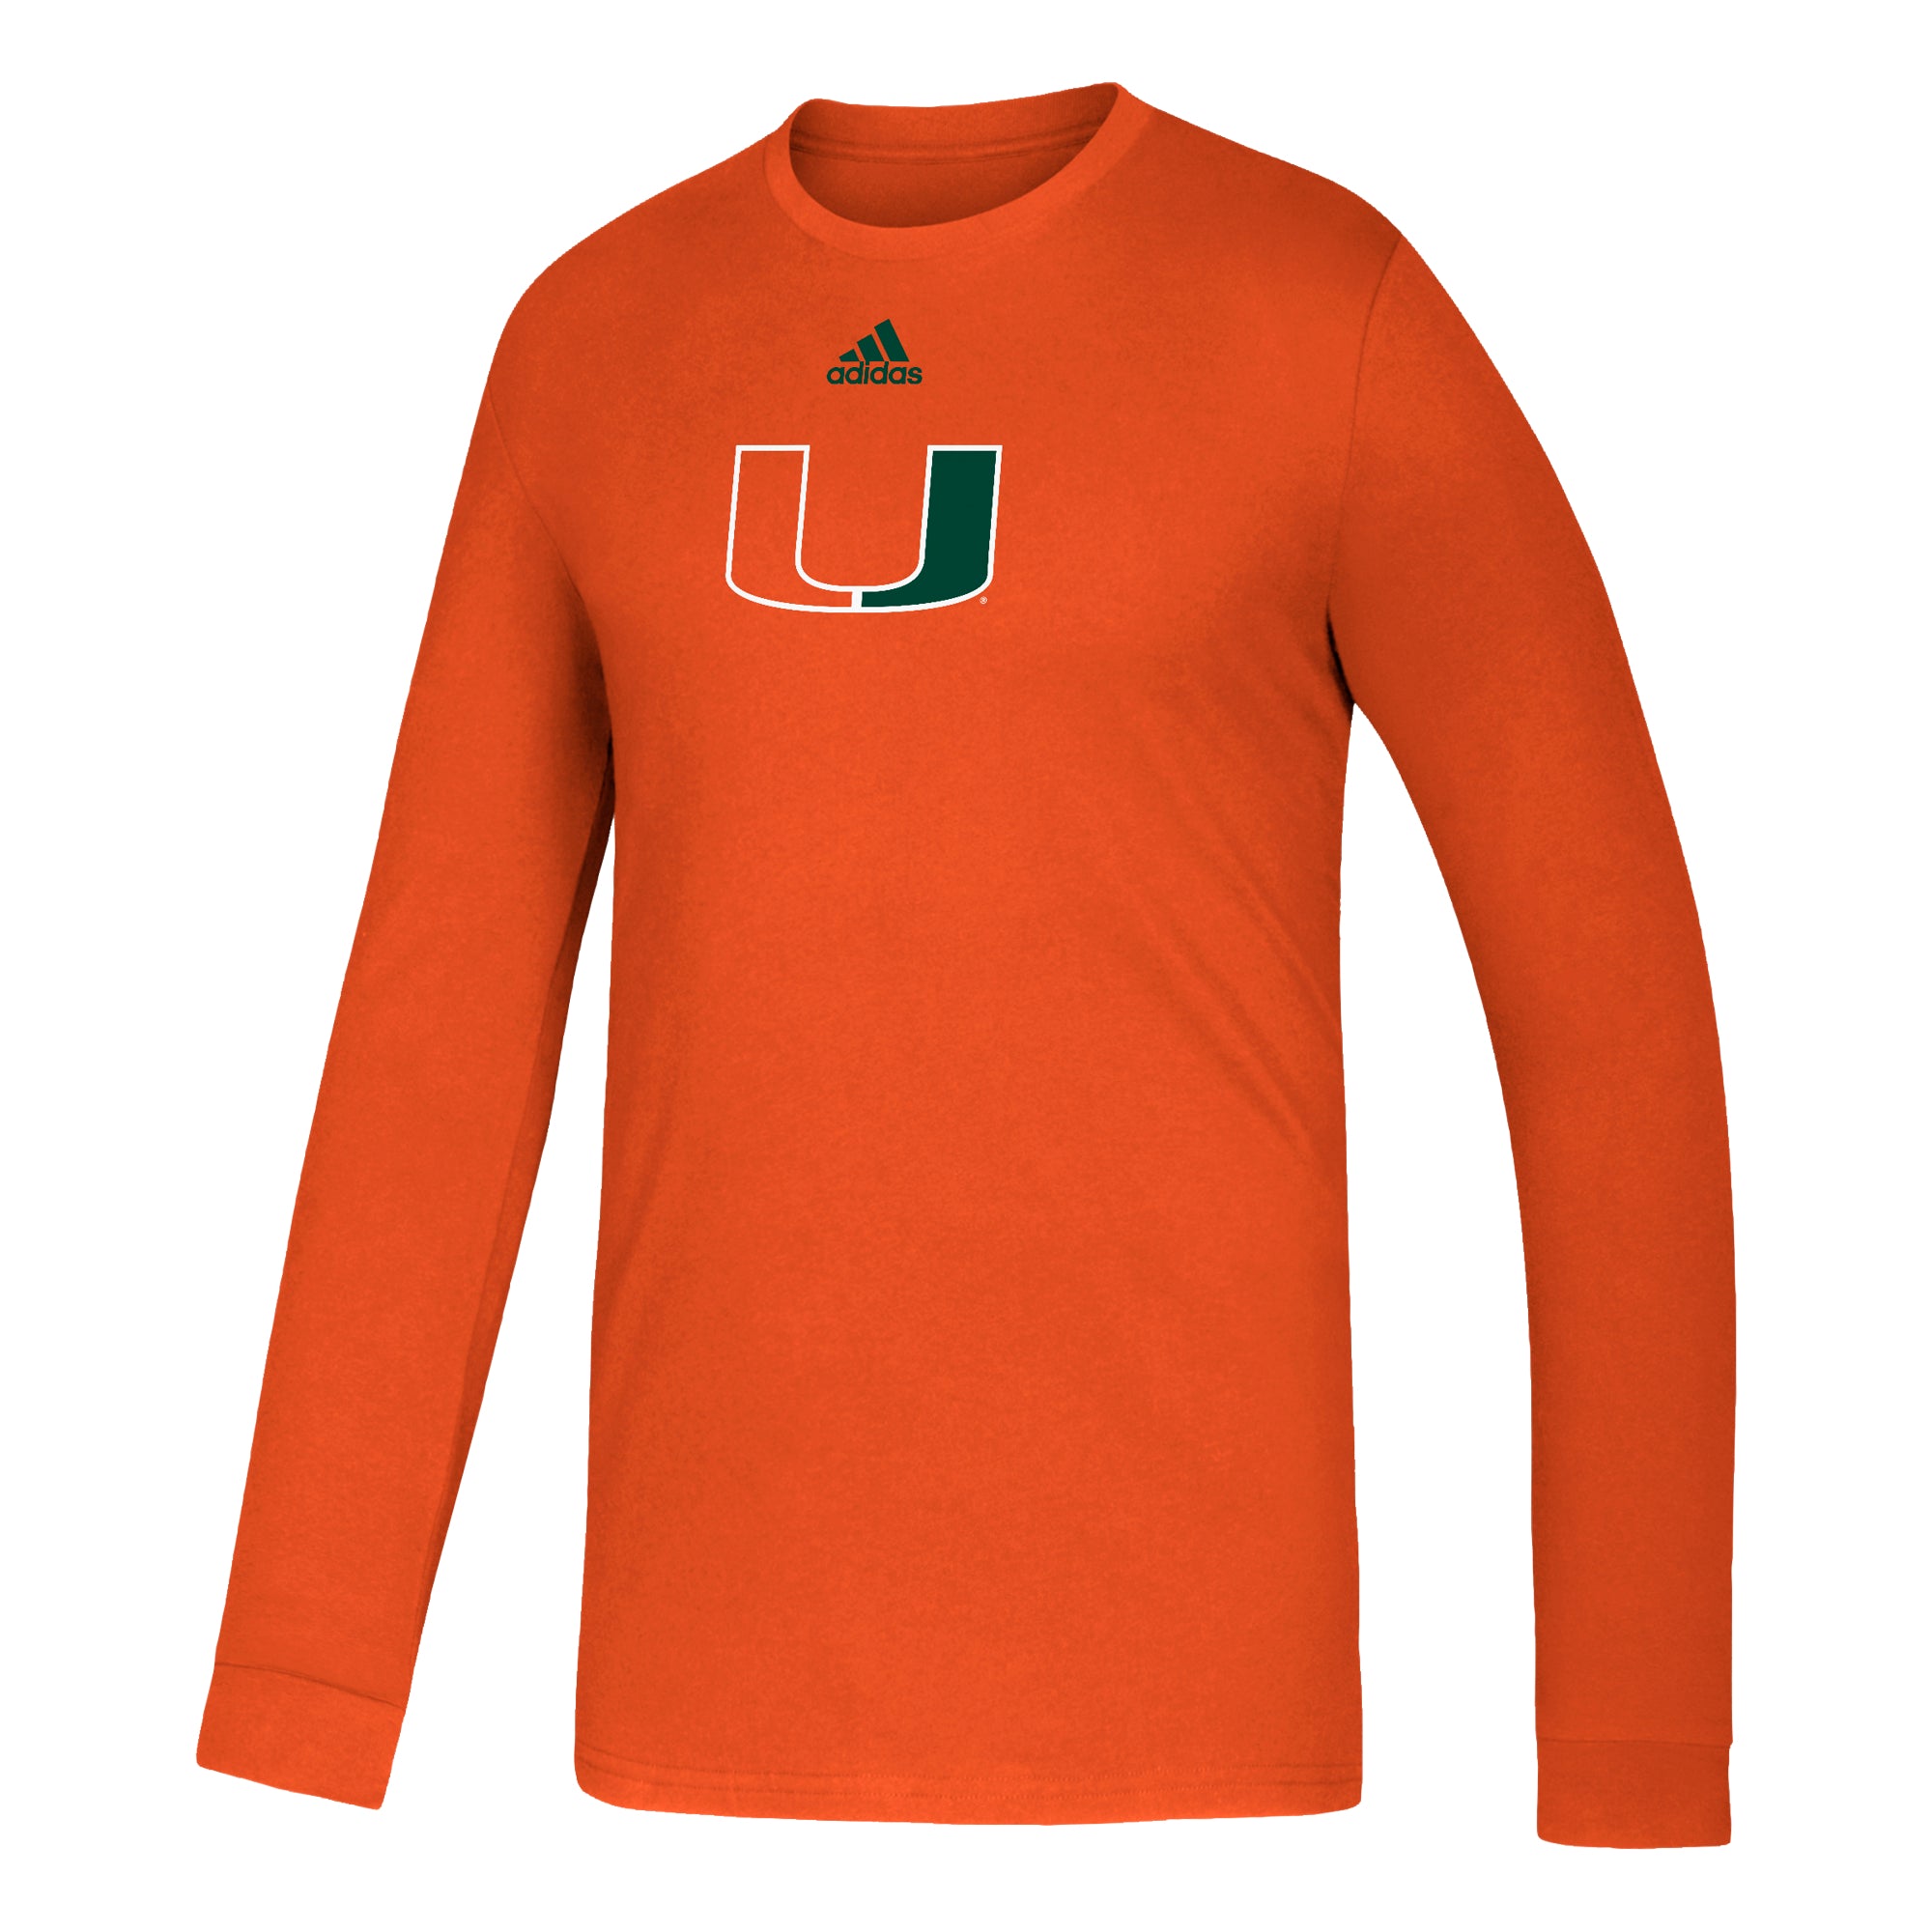 Miami Hurricanes adidas Youth Locker Side by Side Amplifier L/S T-Shirt - Orange